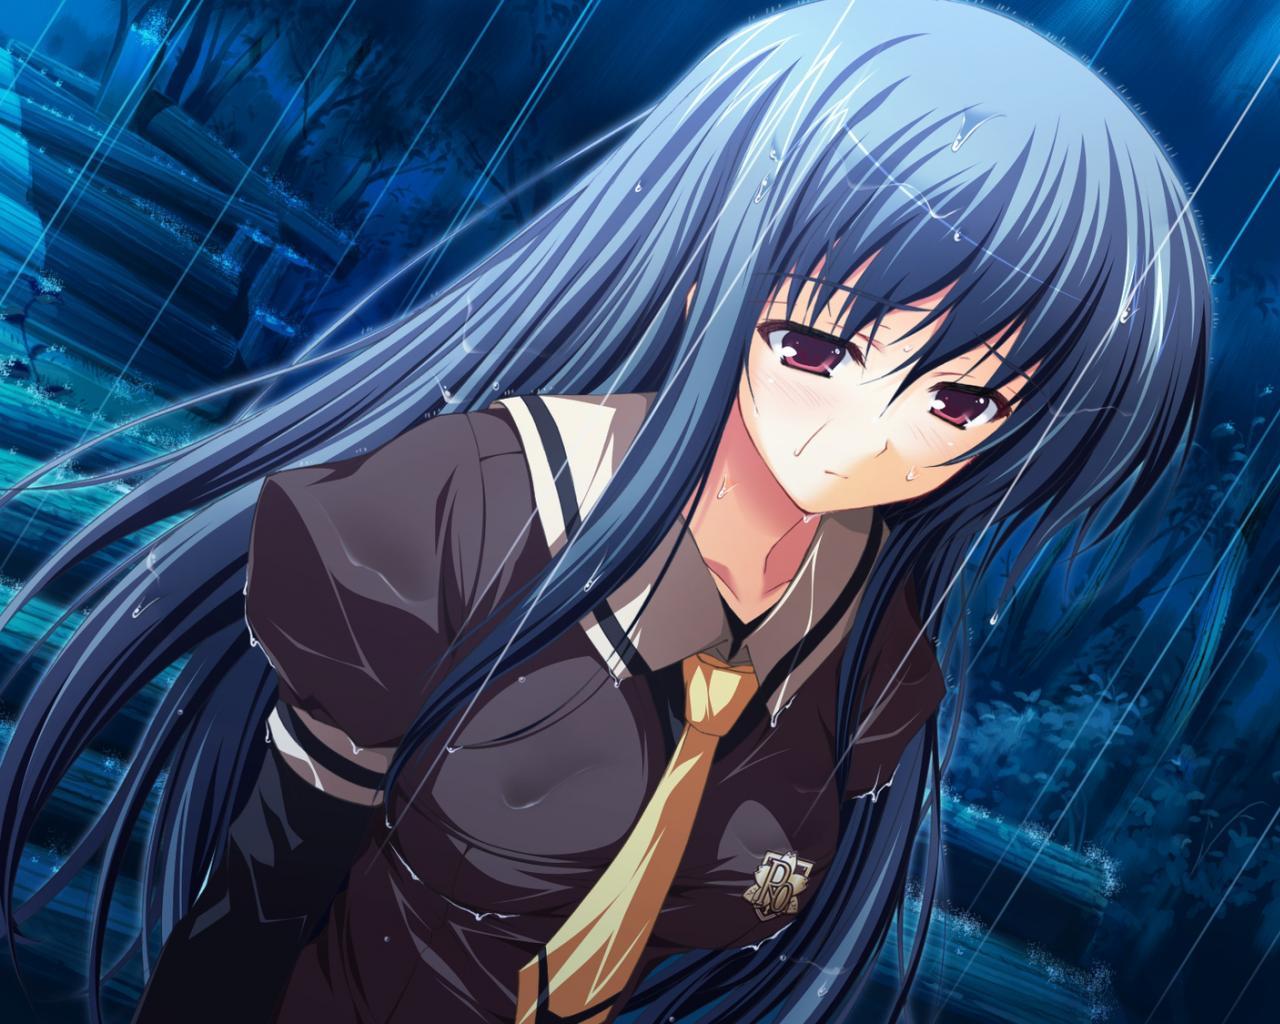 2. "Sad anime girl with blue hair" - wide 2